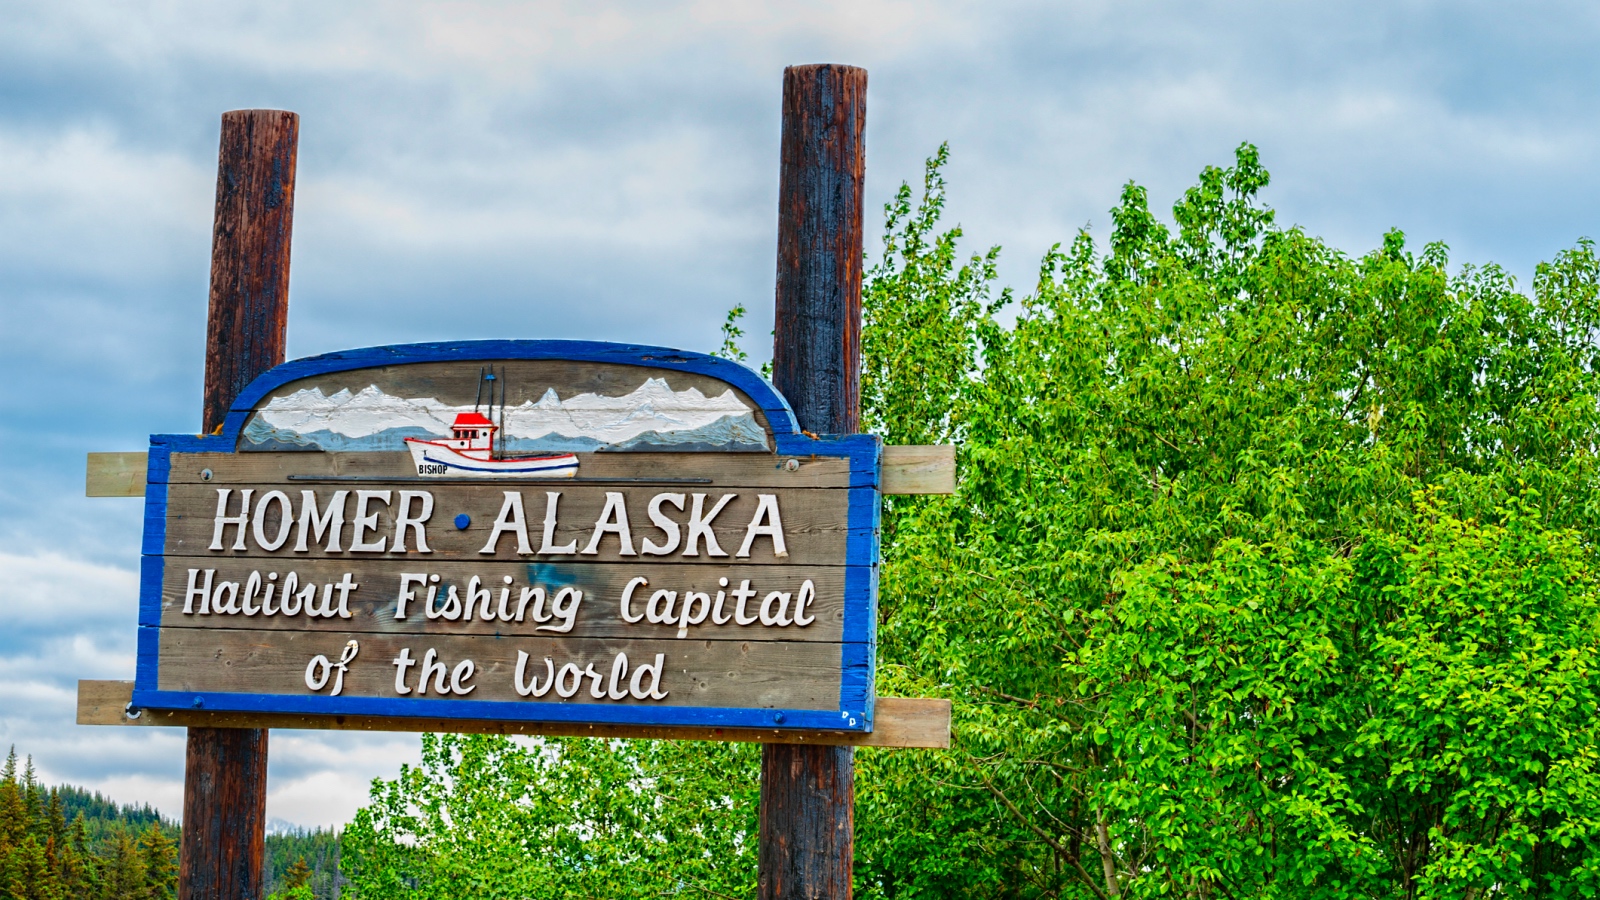 Homer Alaska halibut fishing capital of the world sign